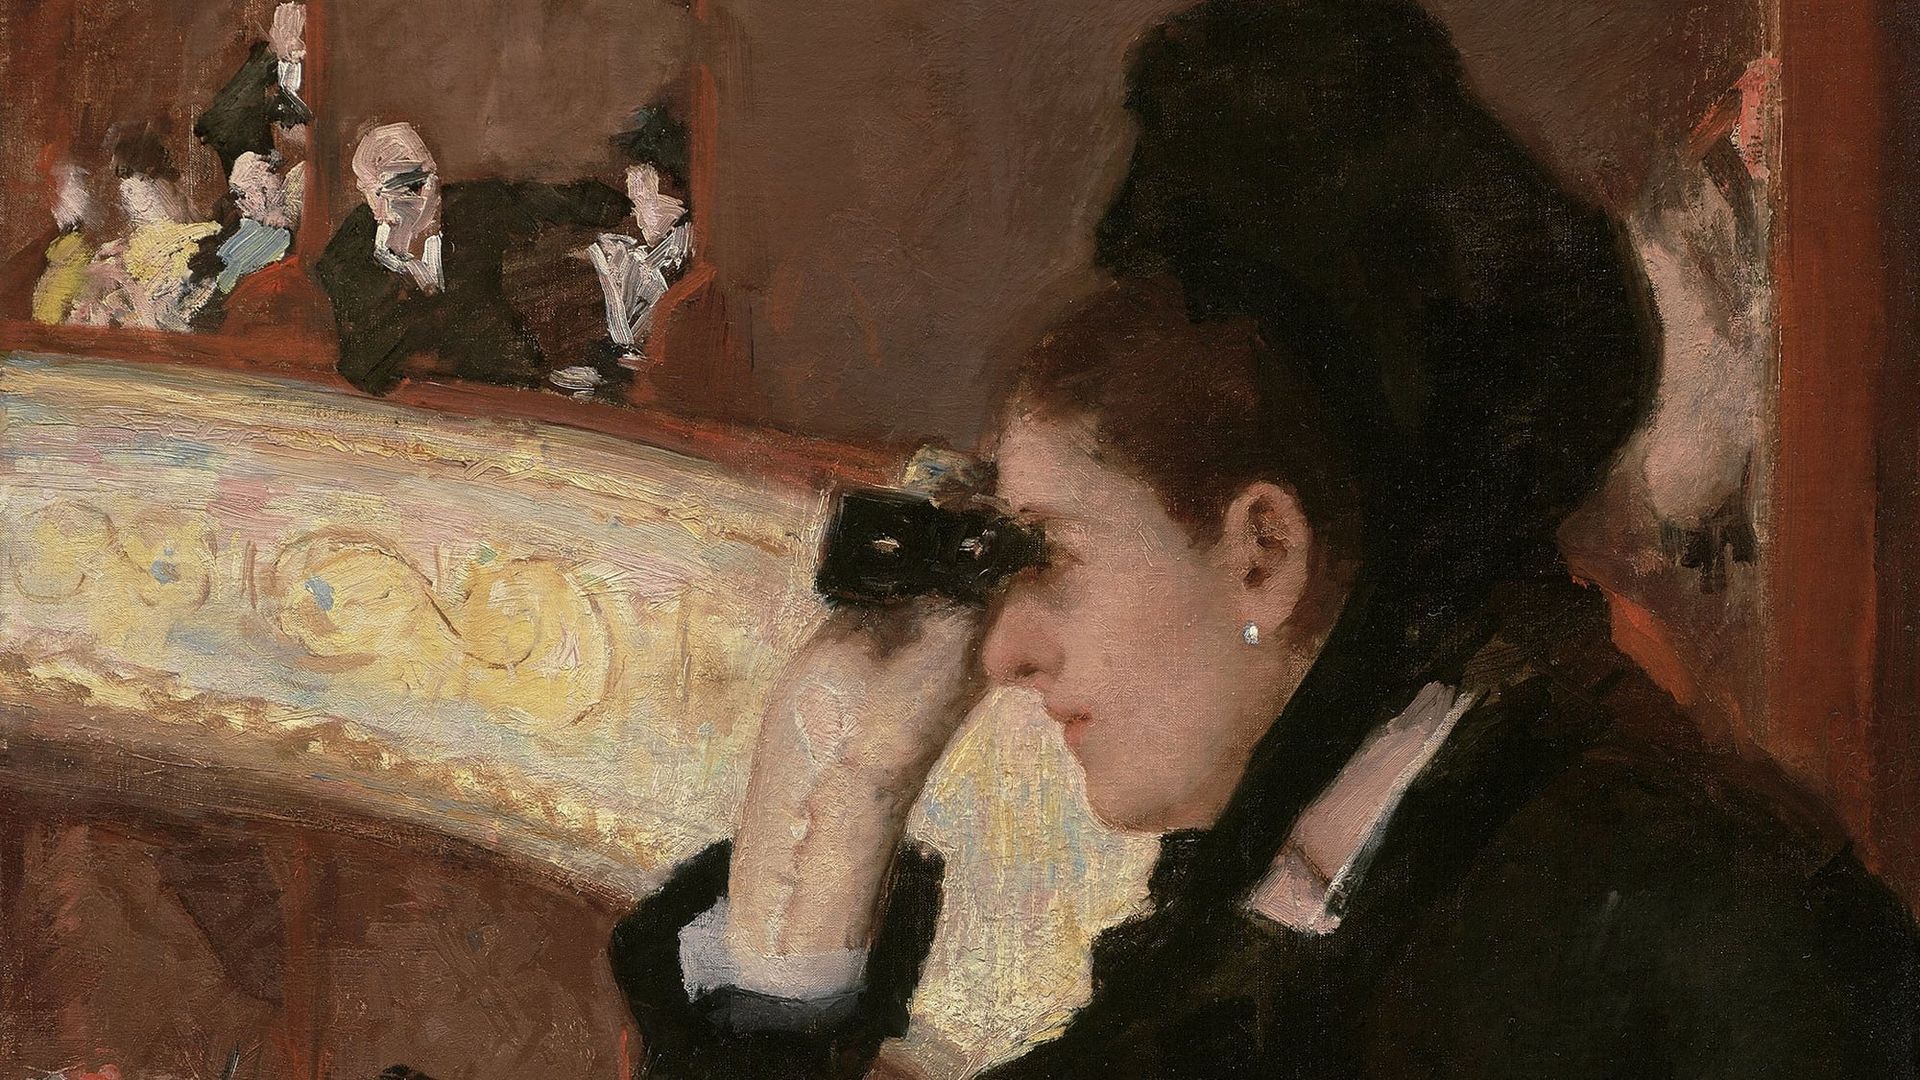 Mary Cassatt: Painting the Modern Woman background